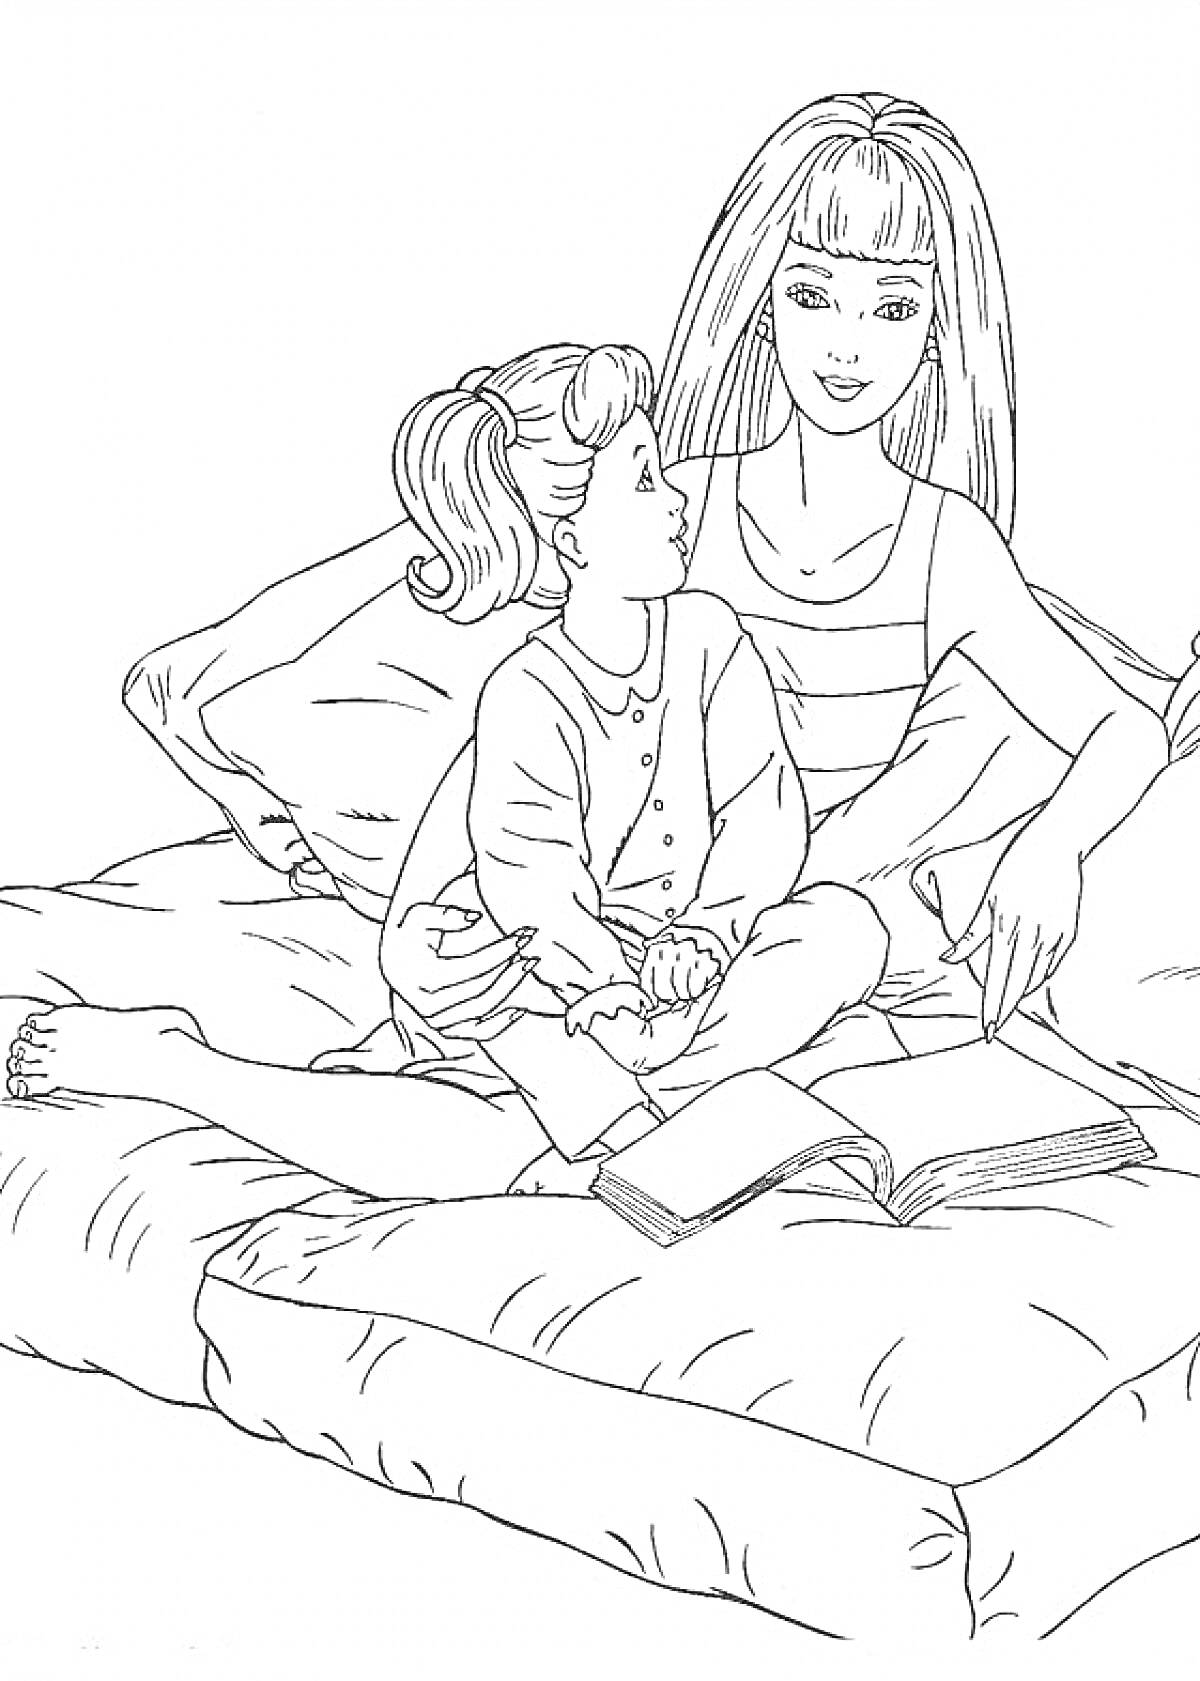 Мама и дочка сидят на кровати с подушками, держат книгу-раскраску